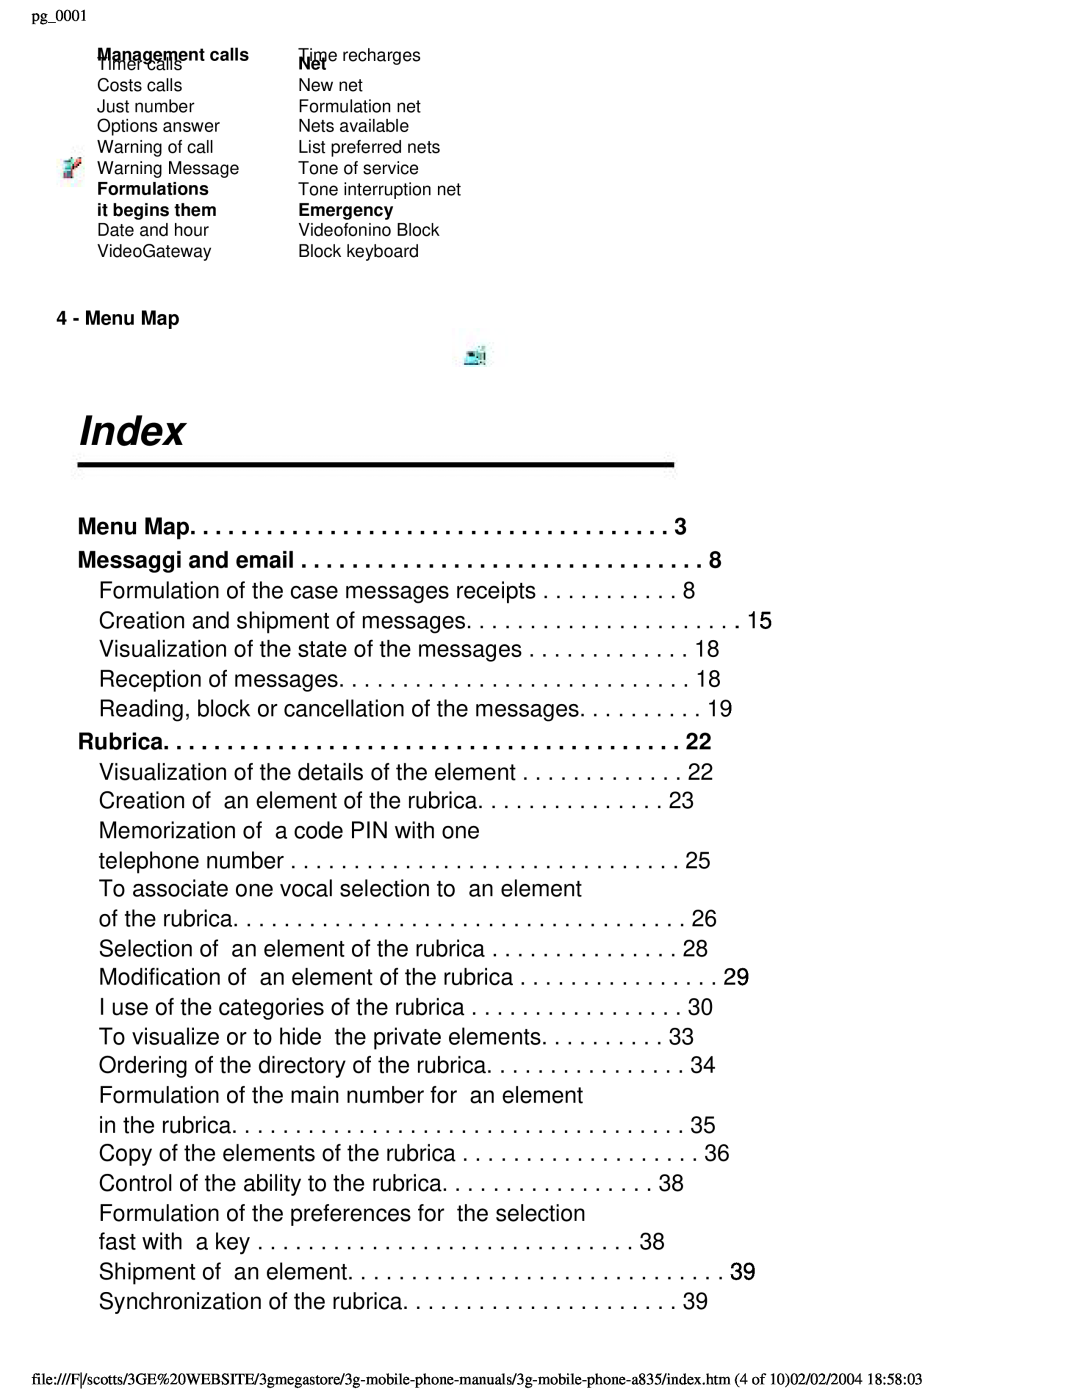 Motorola PG_0001 manual Index, Rubrica 